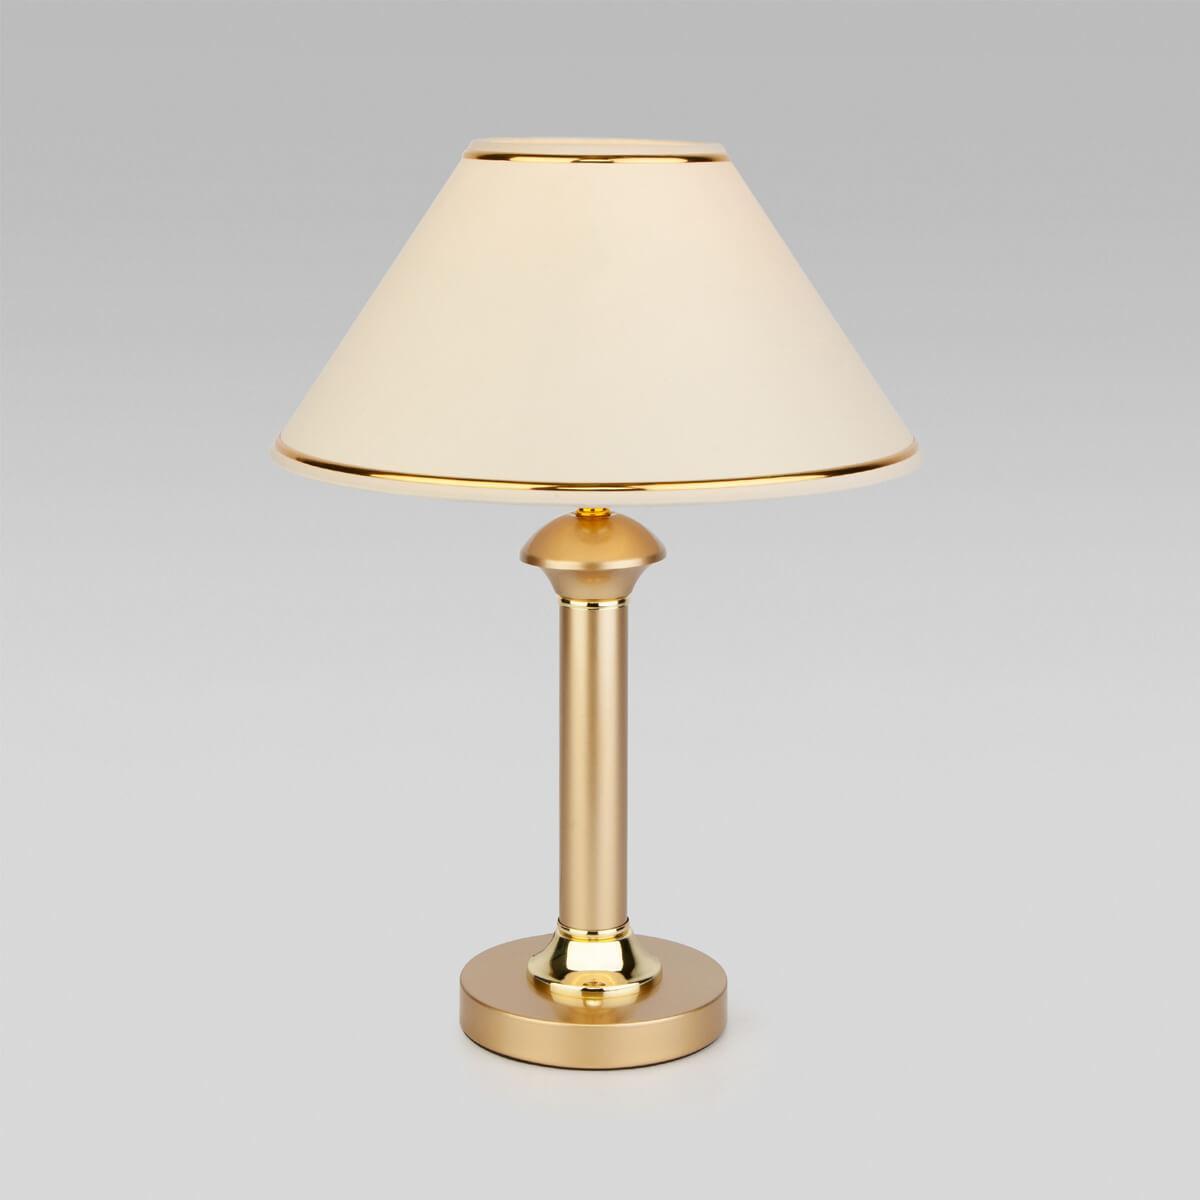 Настольная лампа Eurosvet Lorenzo 60019/1 перламутровое золото настольная лампа джоел е27 40вт черно золотой 15х15х63 см